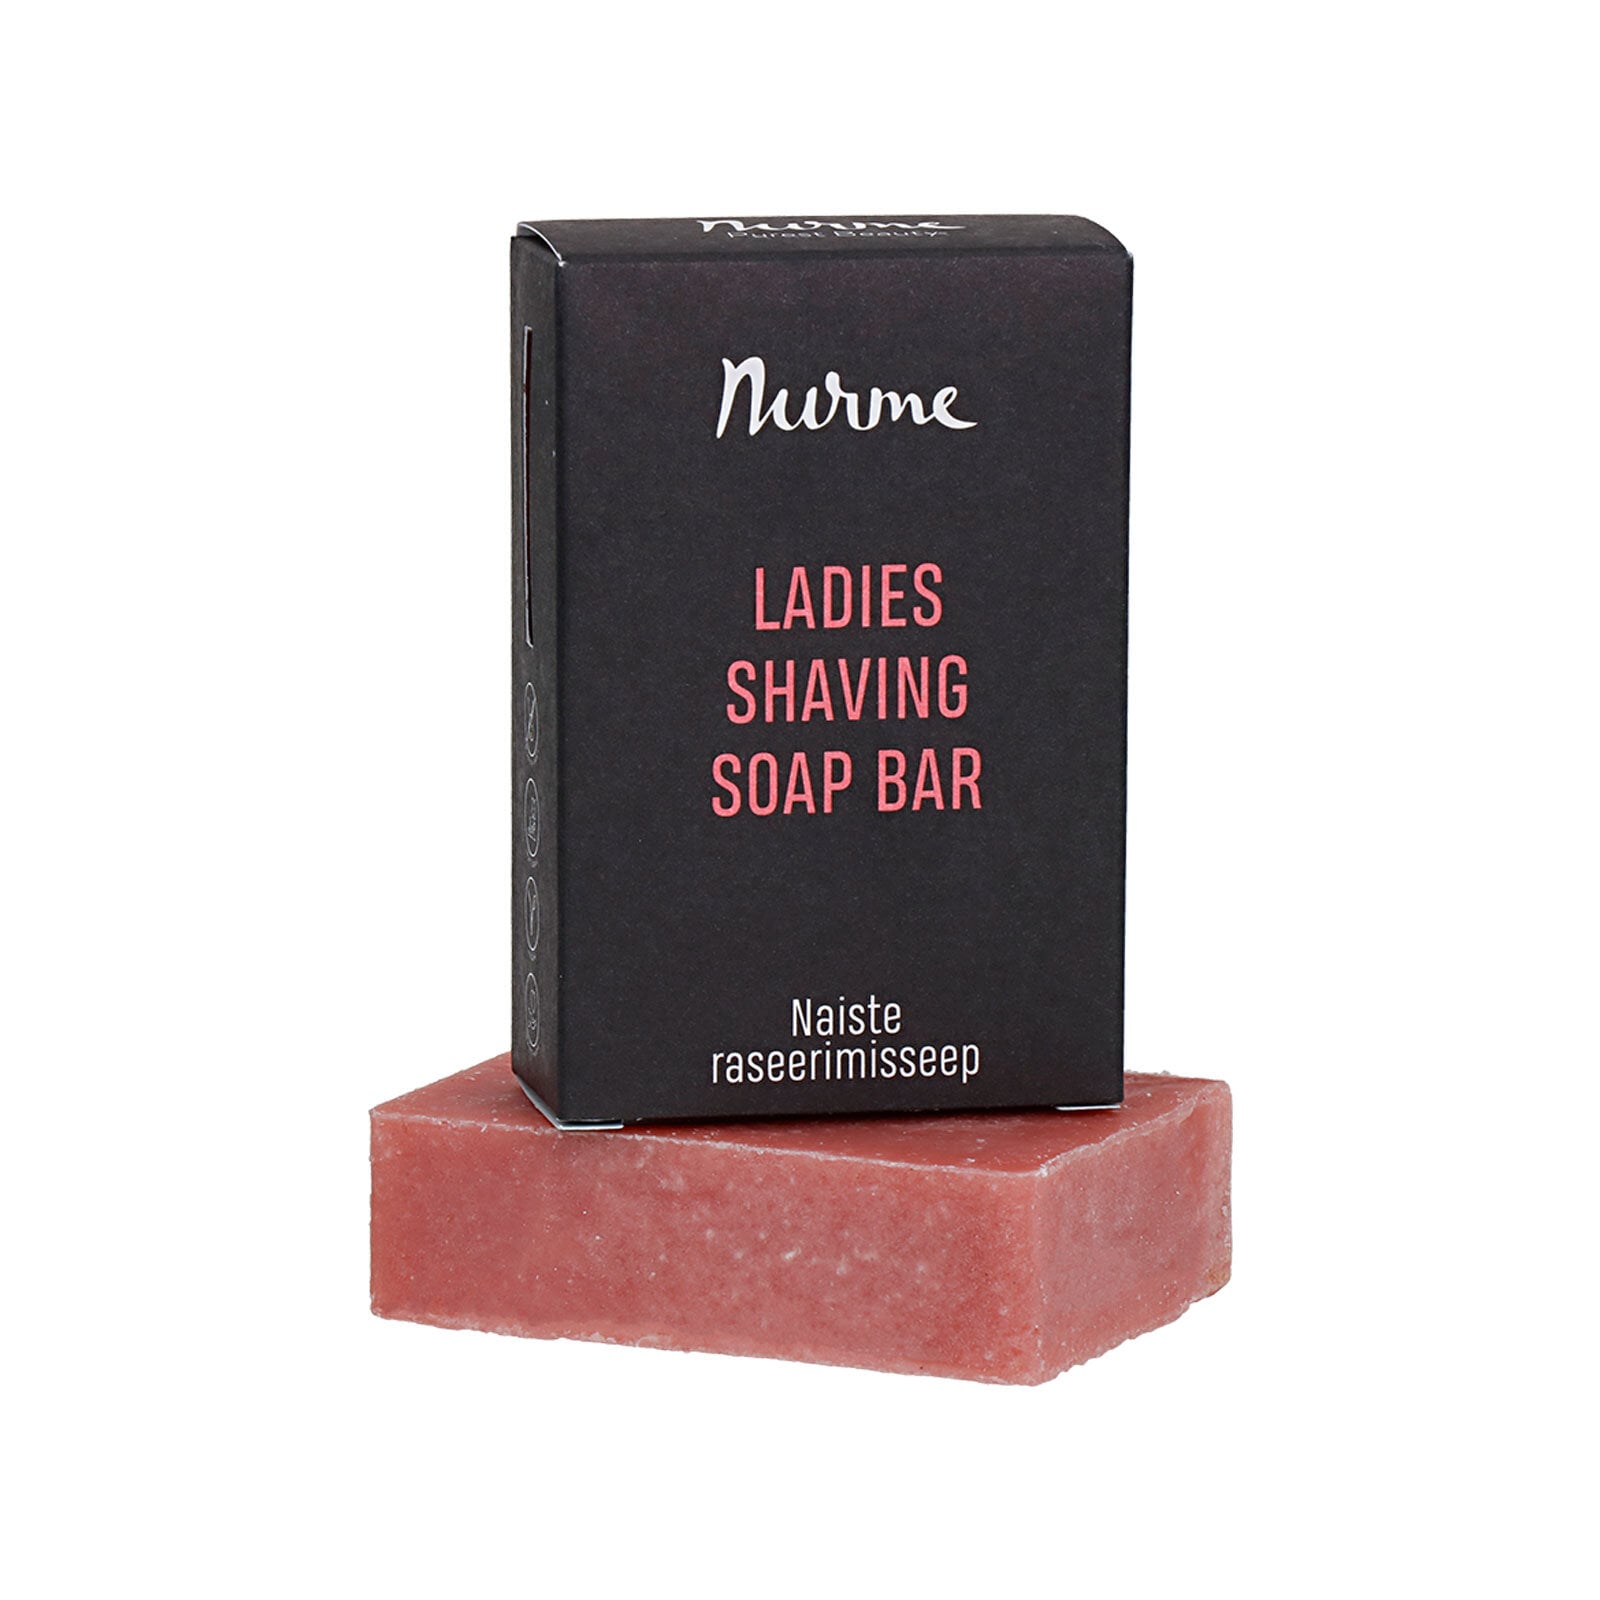 Nurme Ladies Shaving Soap Bar